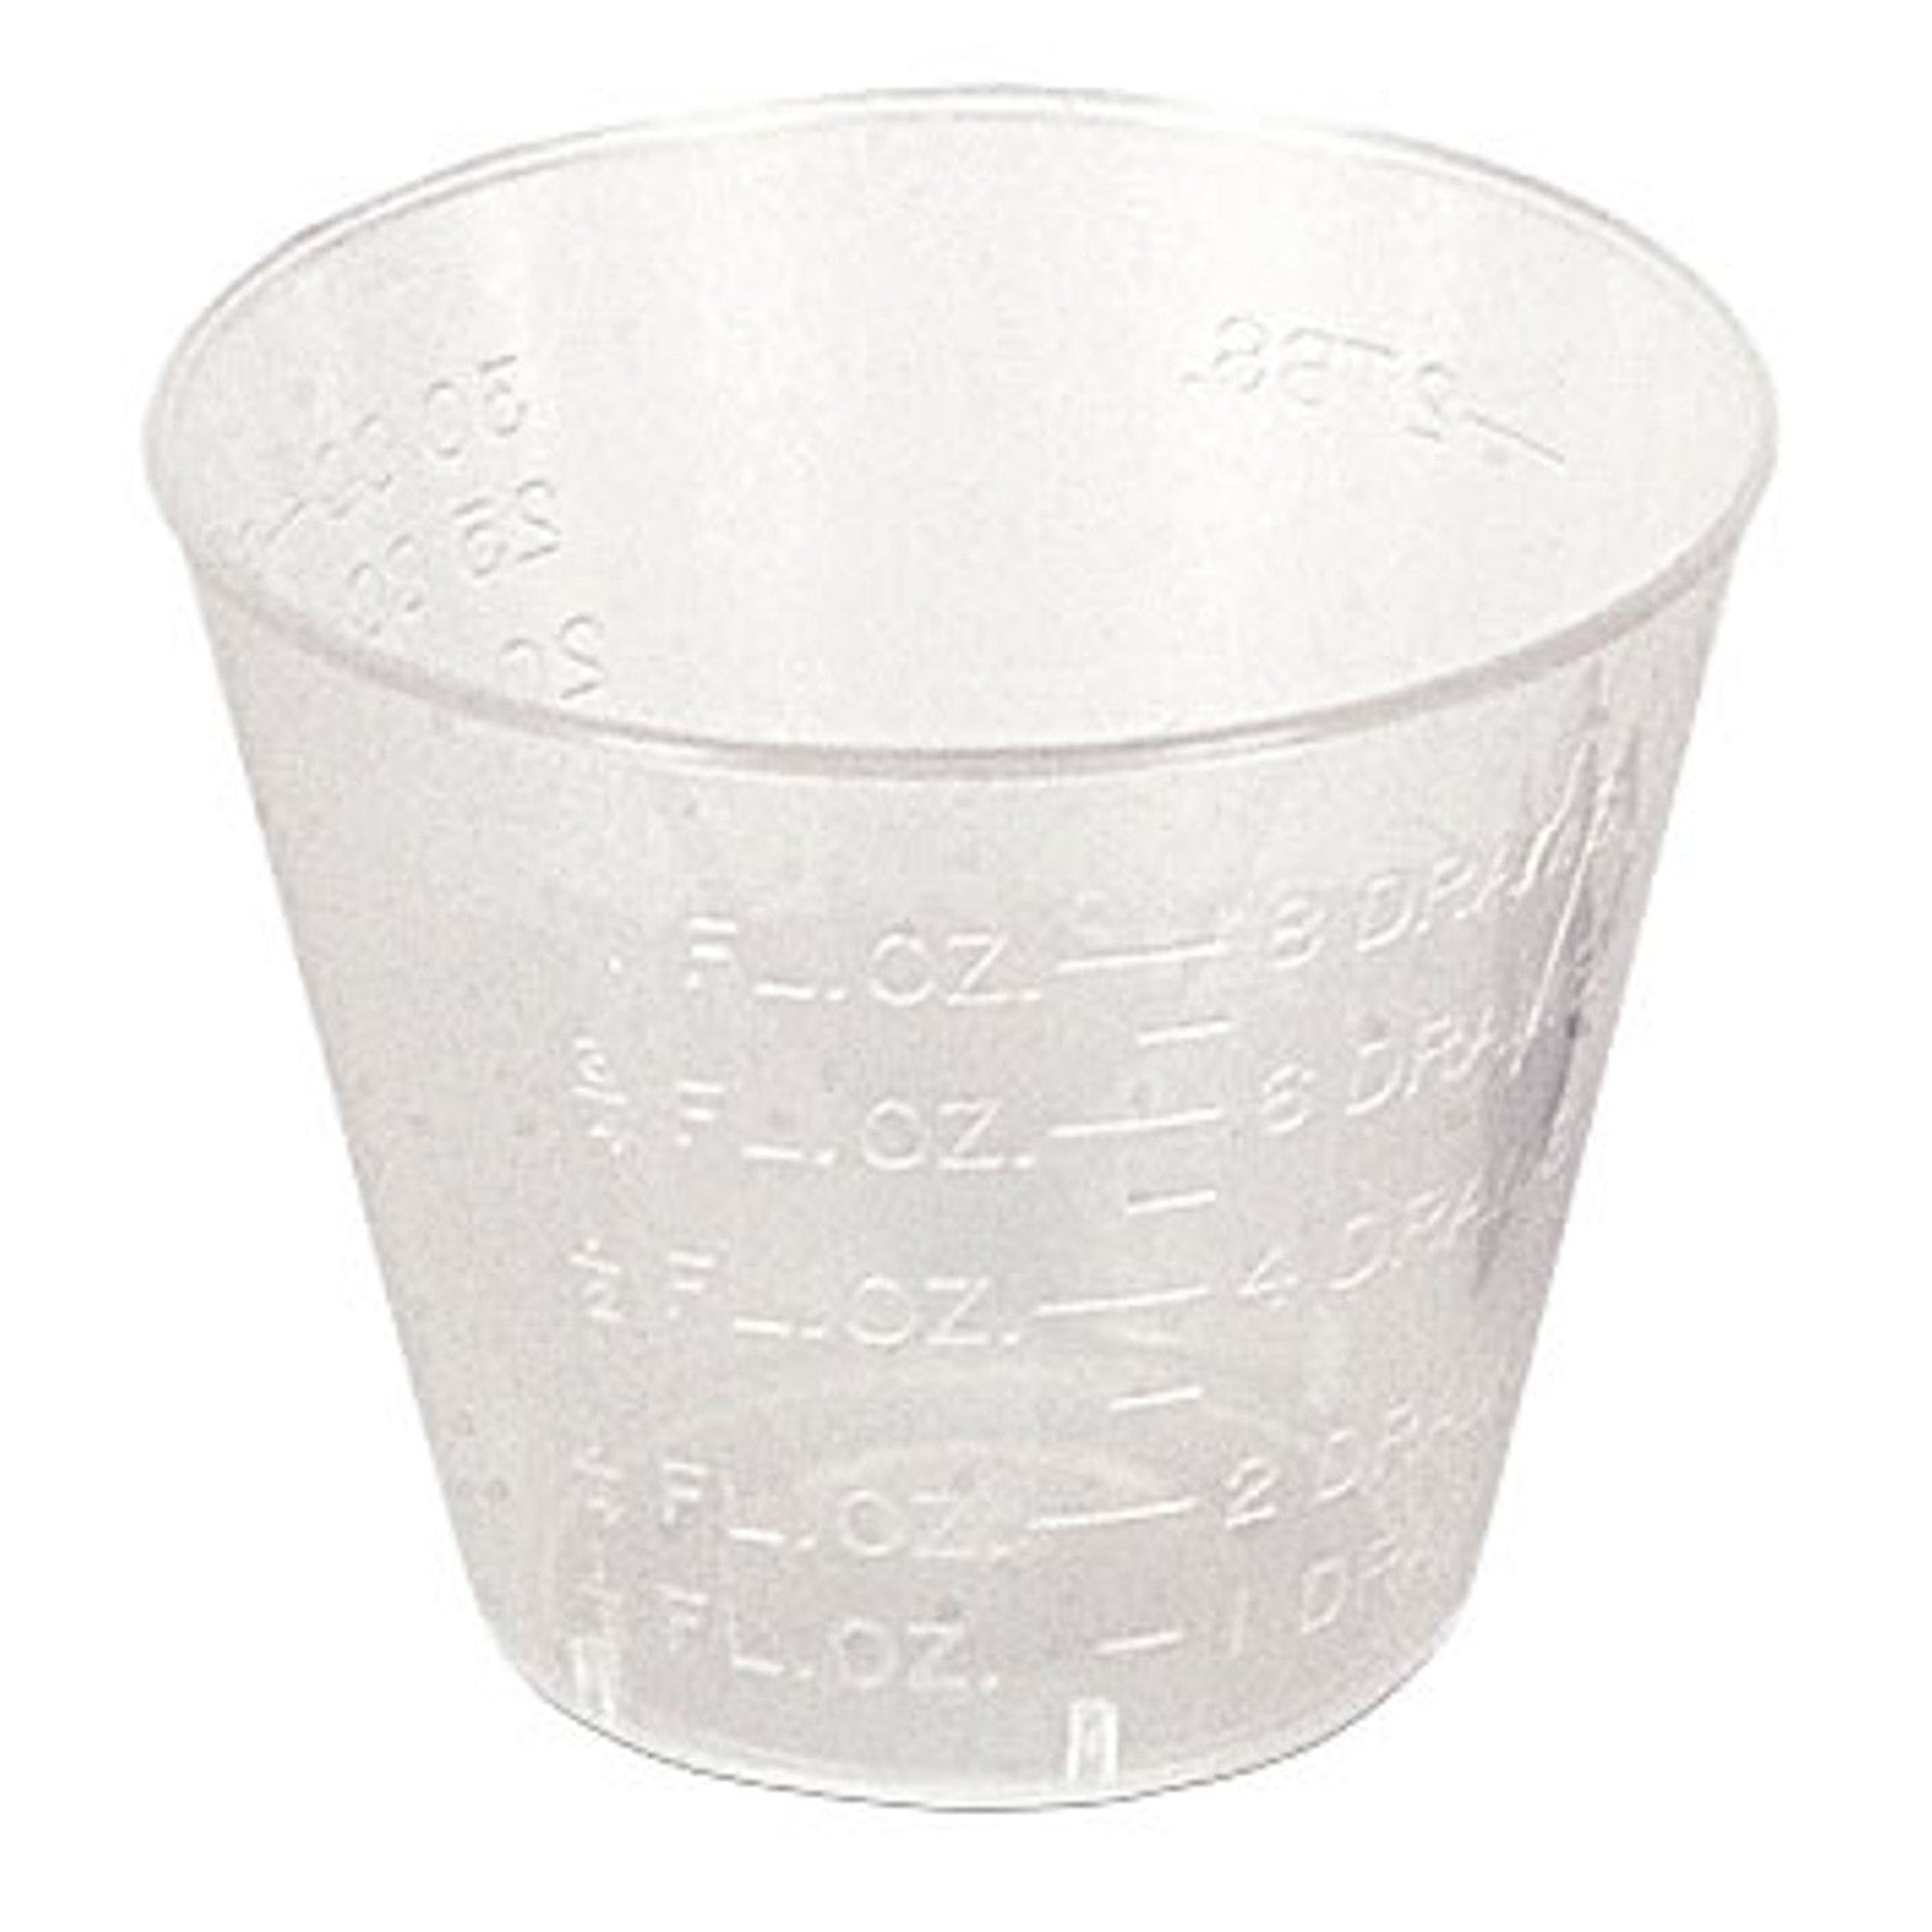 MedPro Medicine Cups - Plastic